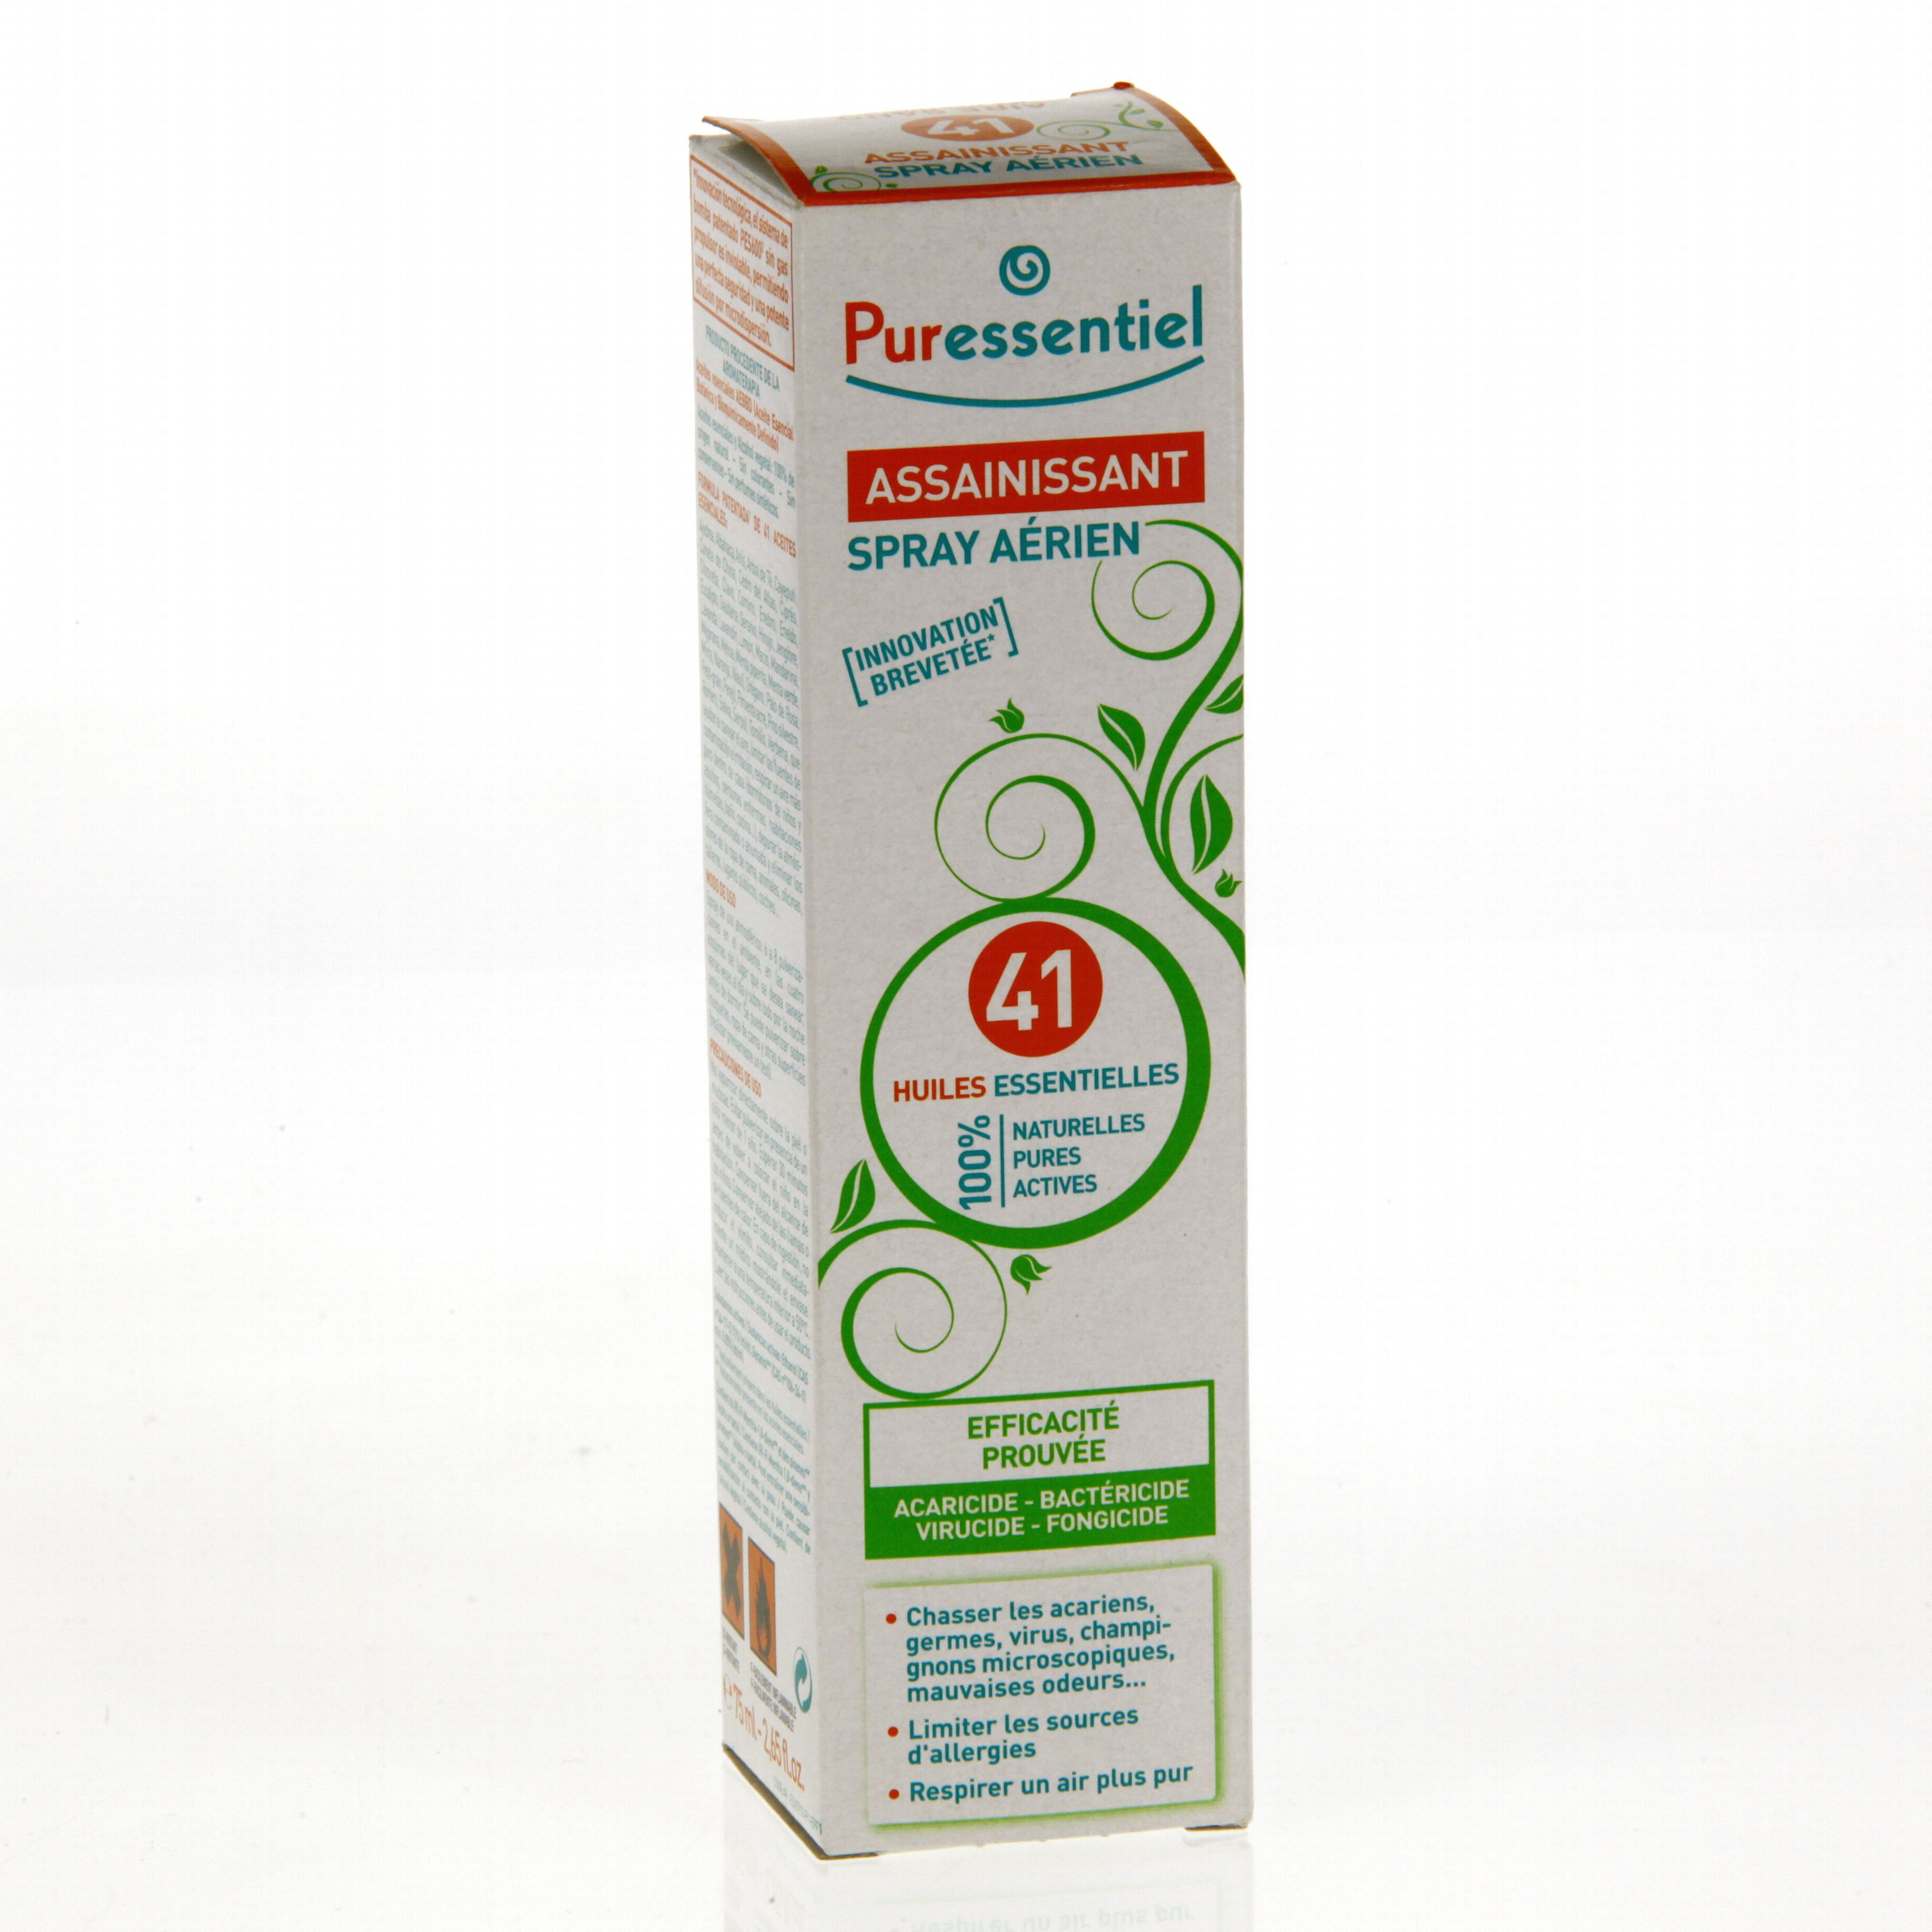 Puressentiel Spray Assainissant aux 41 Huiles essentielles 200 ml